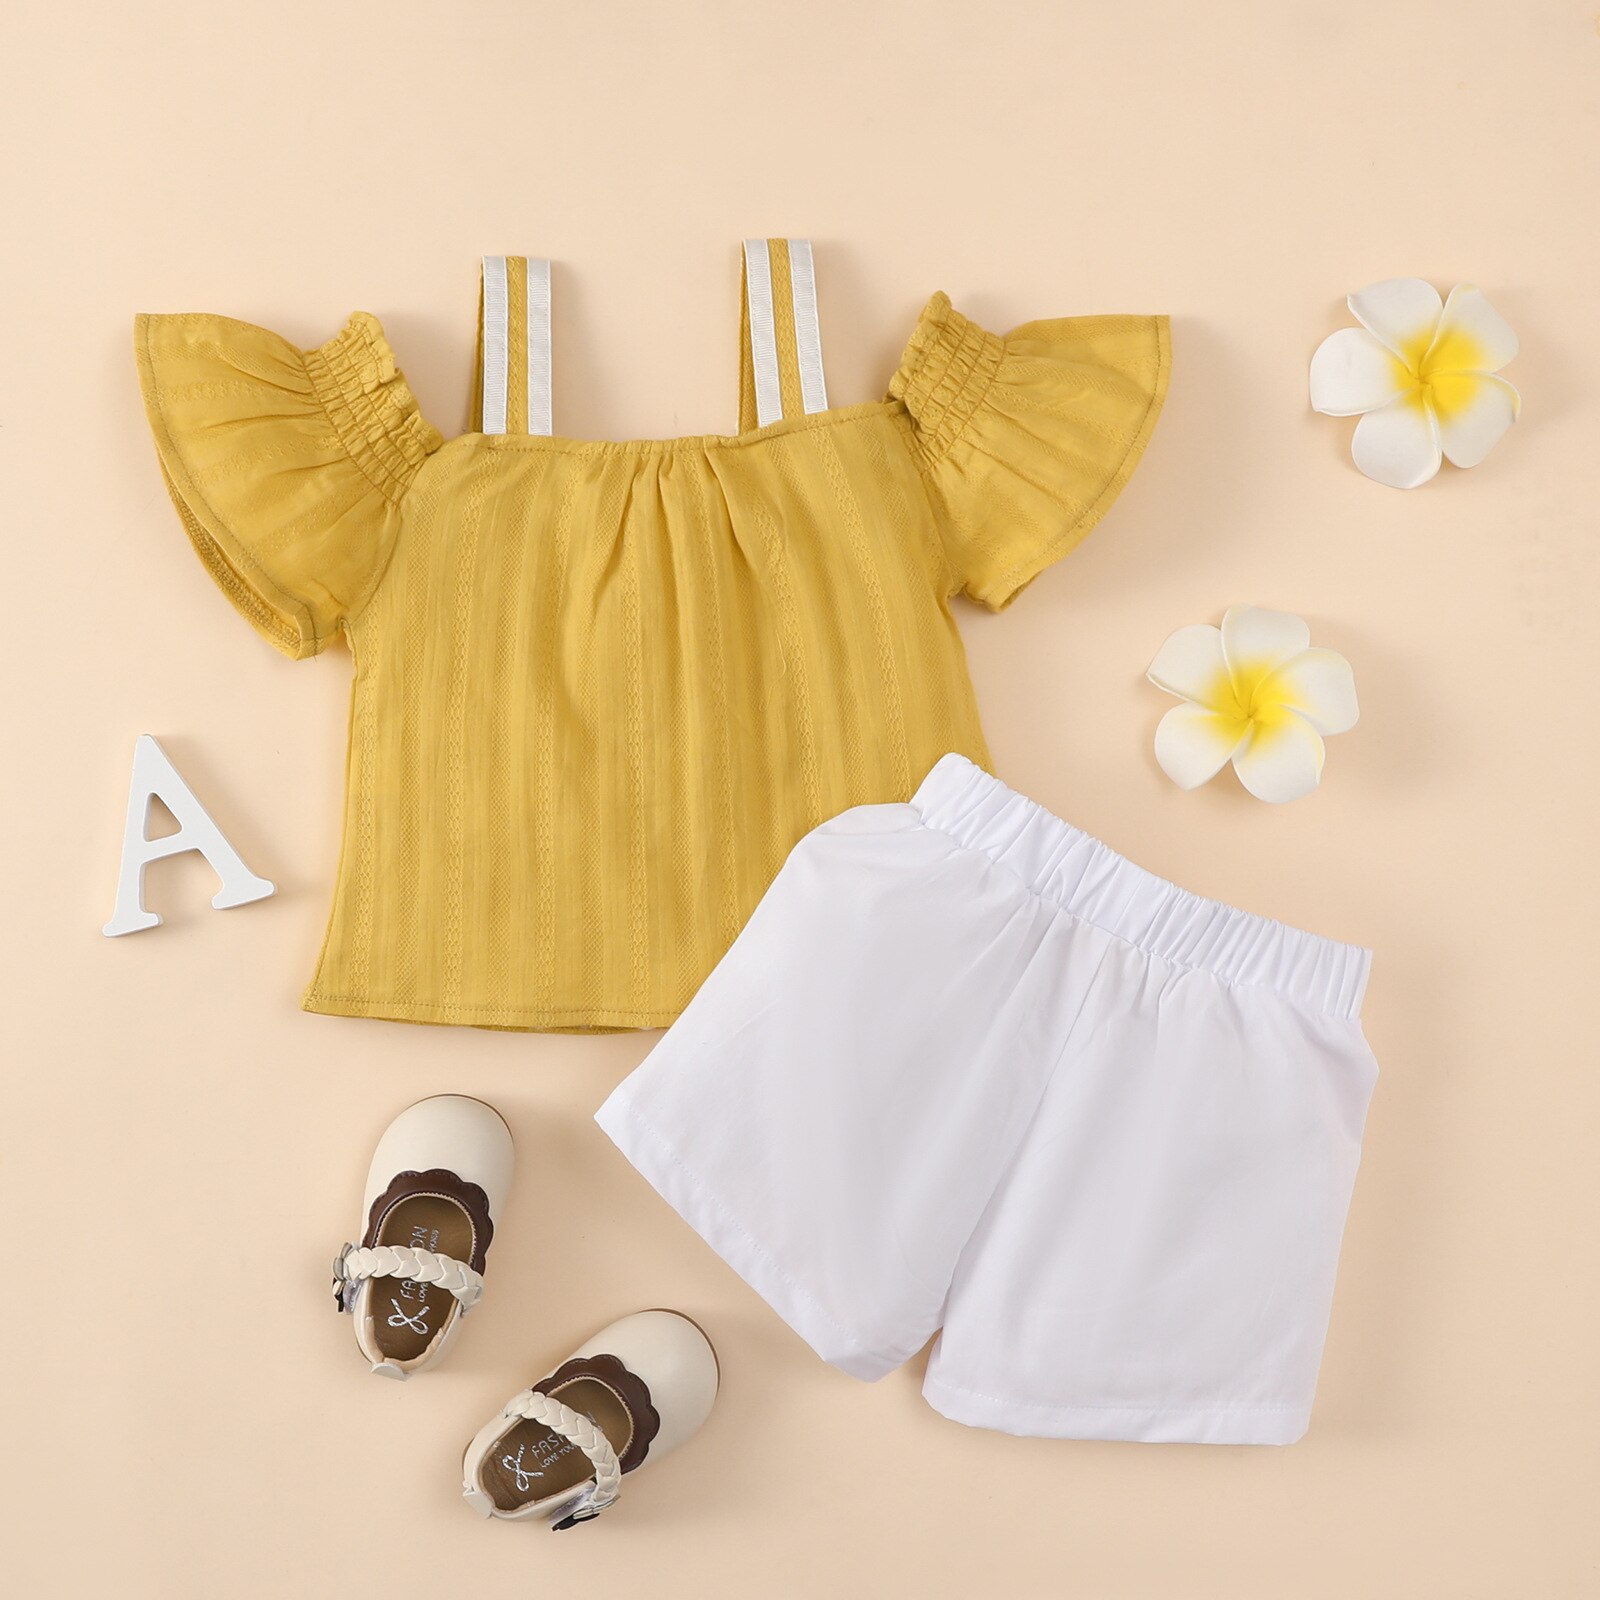 Off-Shoulder-Chrysanthemum-Toddler-Girls-Clothes-Summer-Short-Ruffle-Sleeve-Strap-T-Shirt-White-Lace-Shorts-1